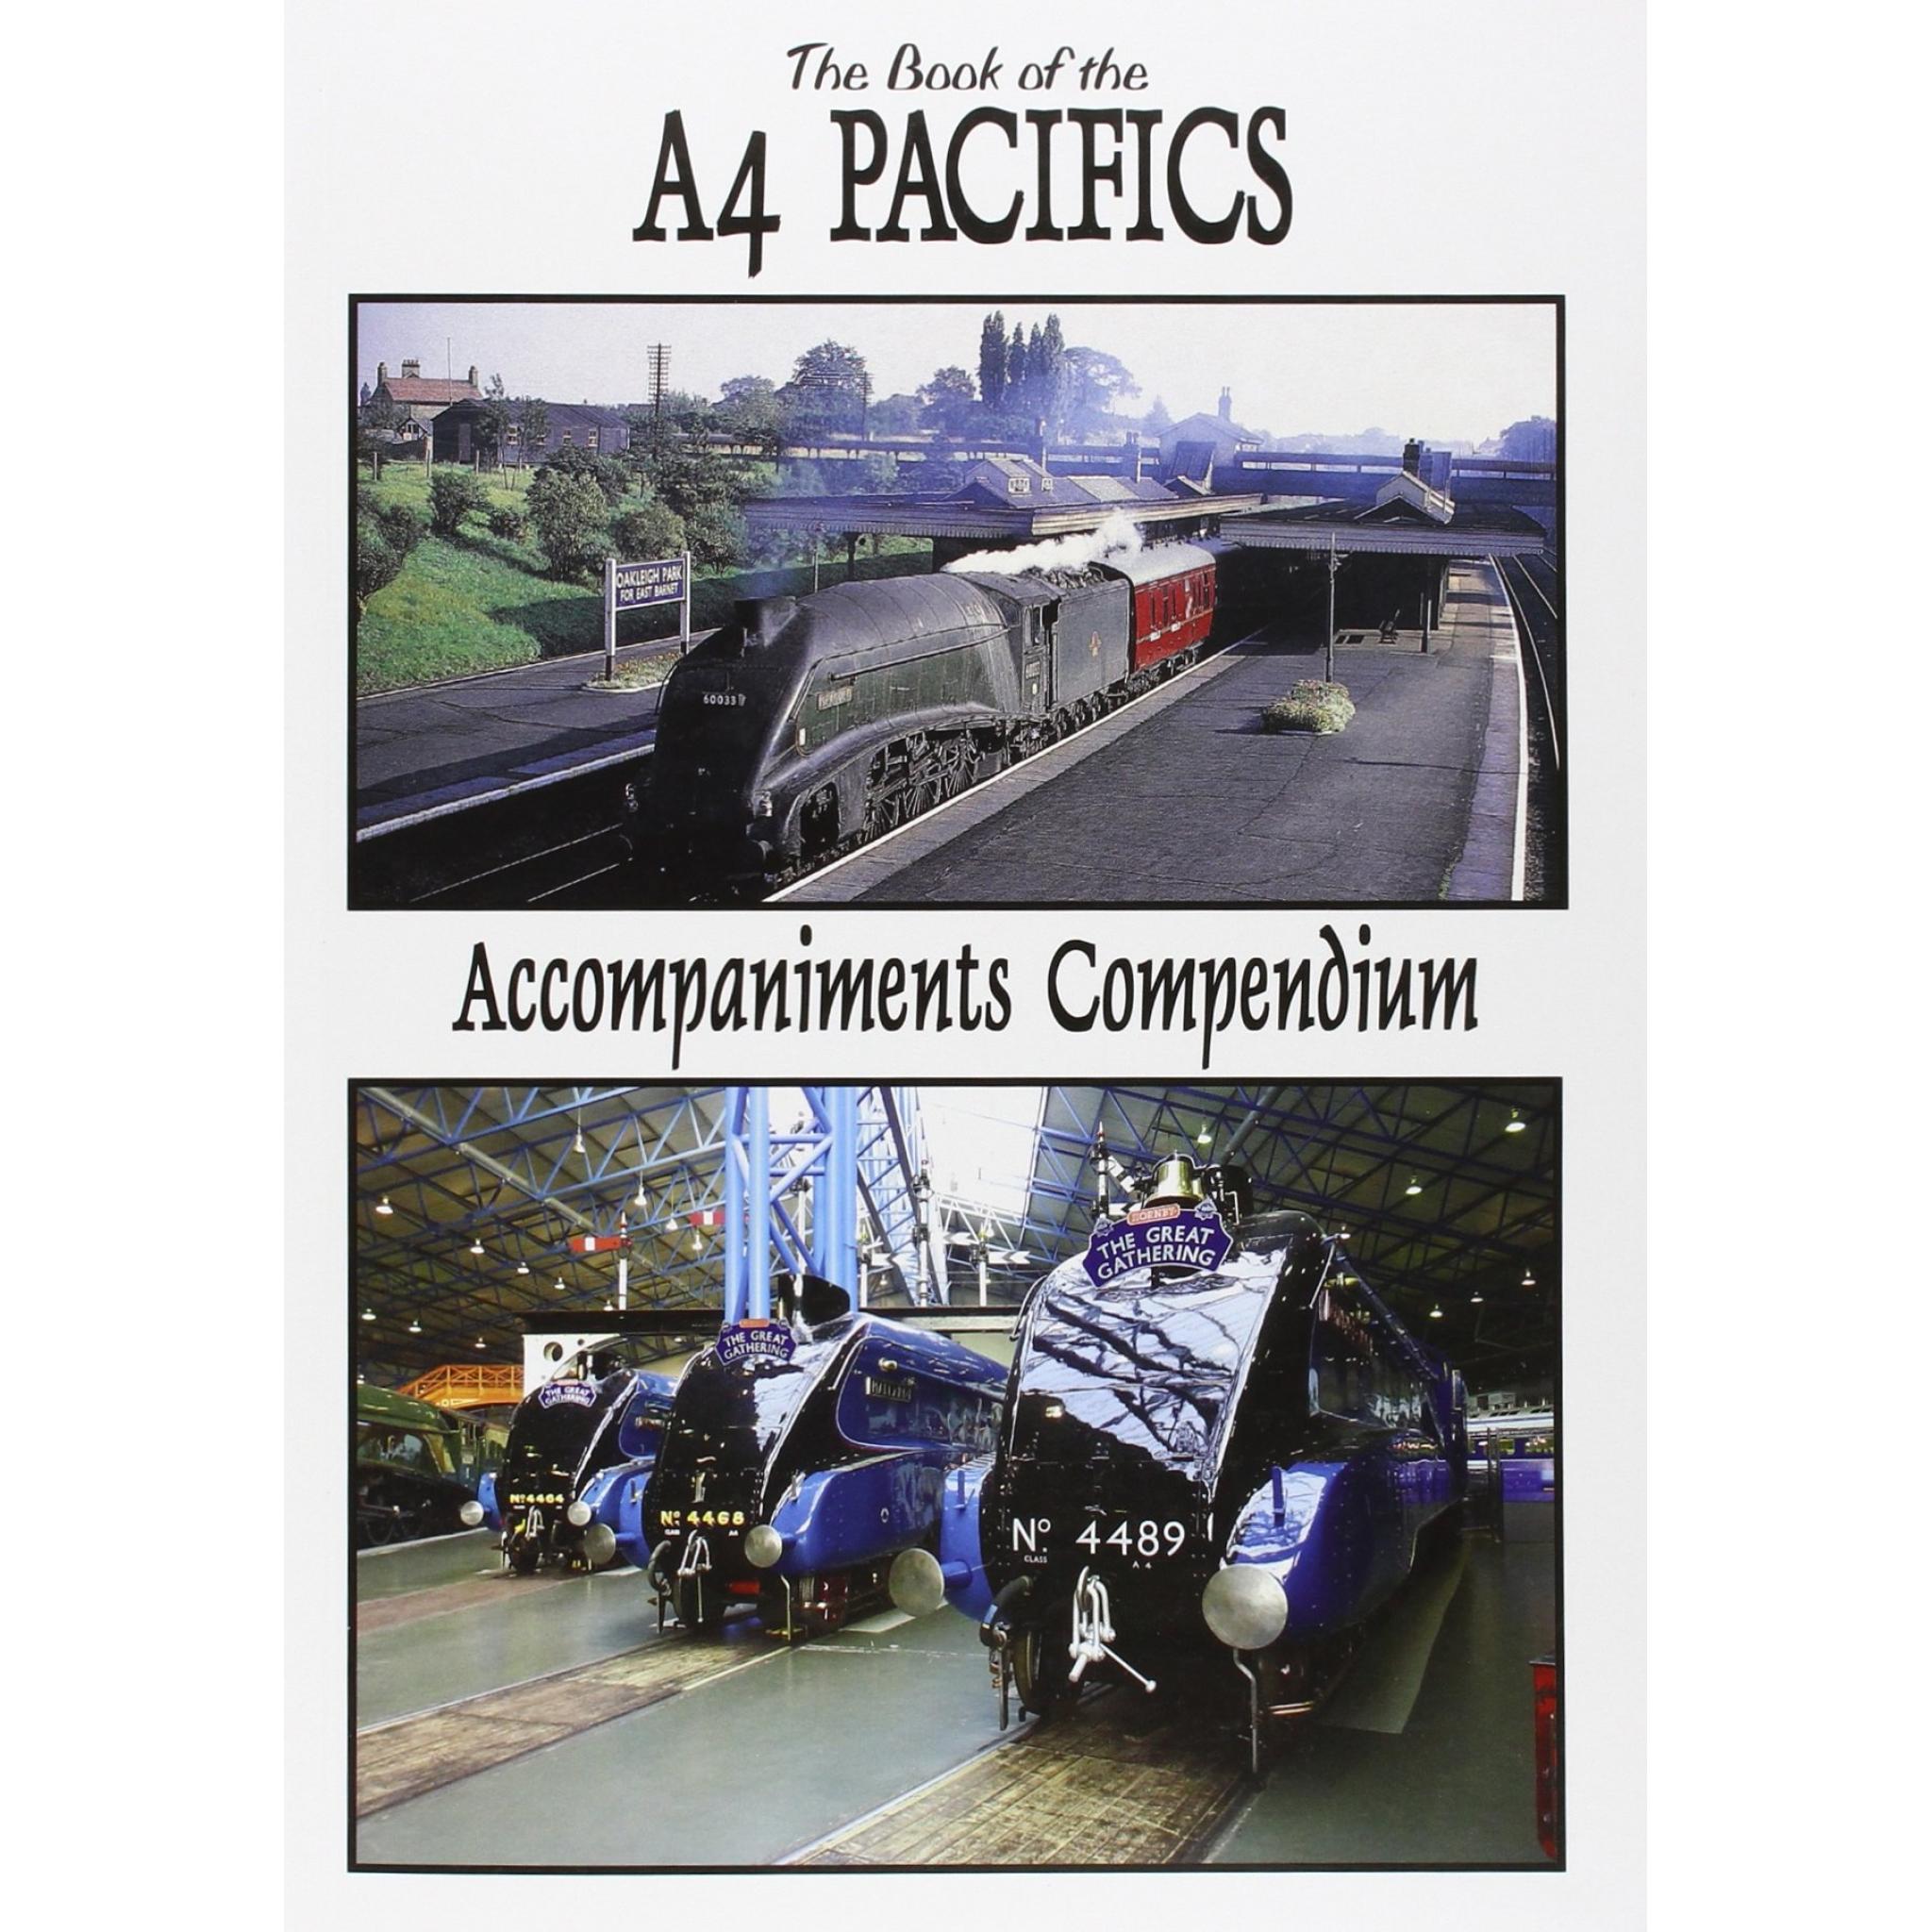 The A4 PACIFICS - Accompaniments Compendium